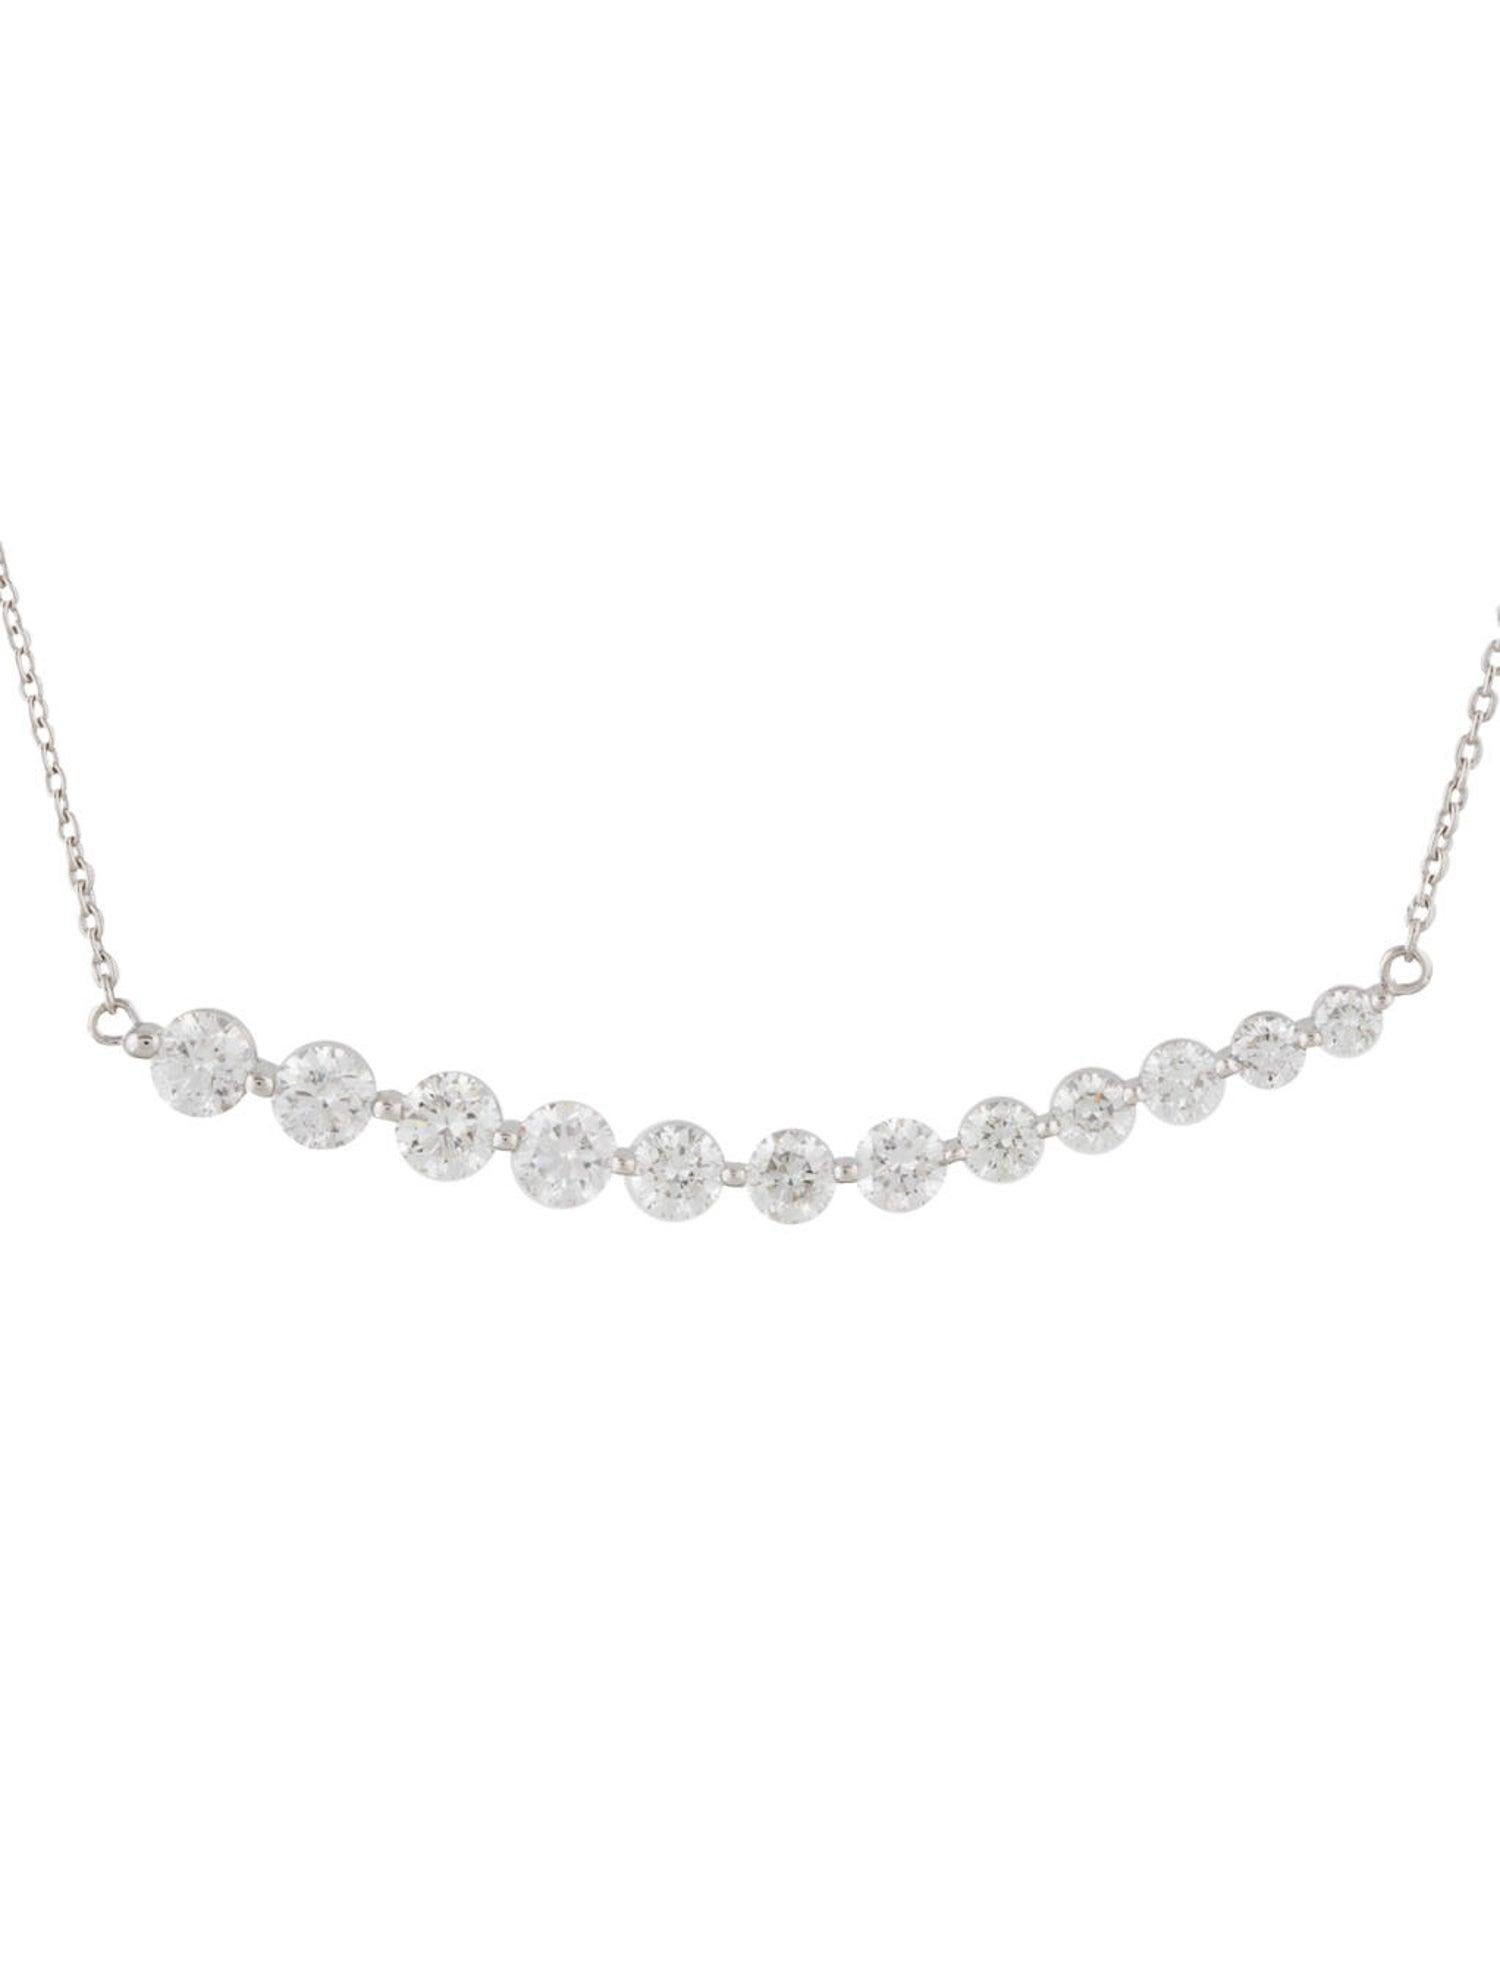 Women's 14 Karat White Gold 1.06 Carat Diamond Curved Bar Necklace For Sale